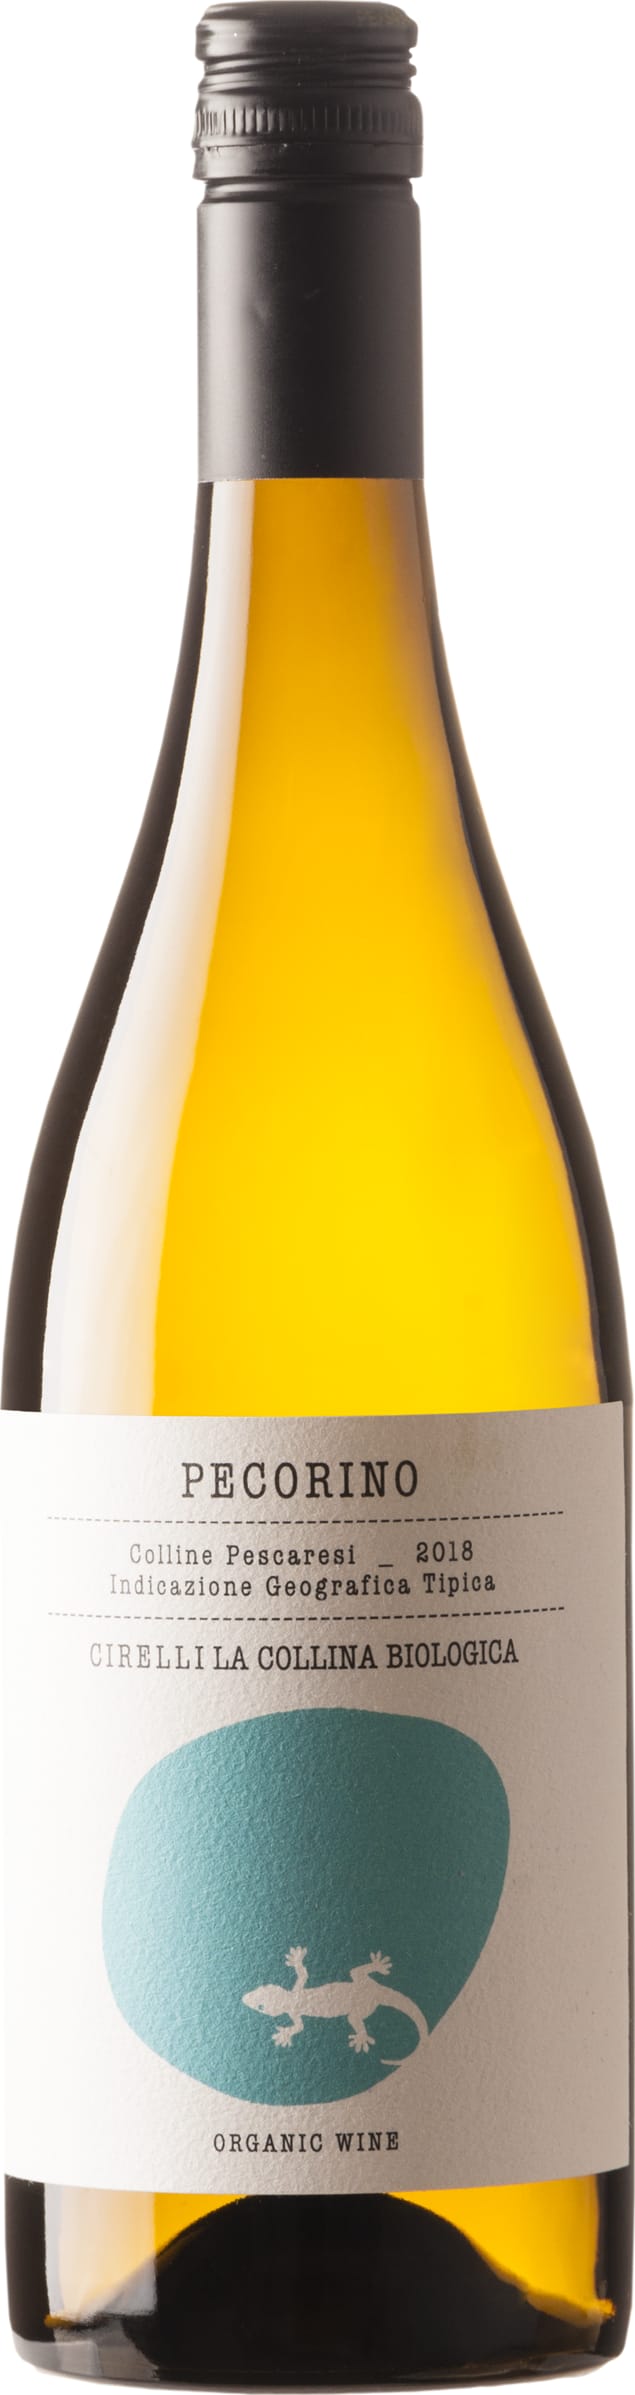 Francesco Cirelli Pecorino IGT Colline Pescaresi Organic 2022 75cl - Buy Francesco Cirelli Wines from GREAT WINES DIRECT wine shop